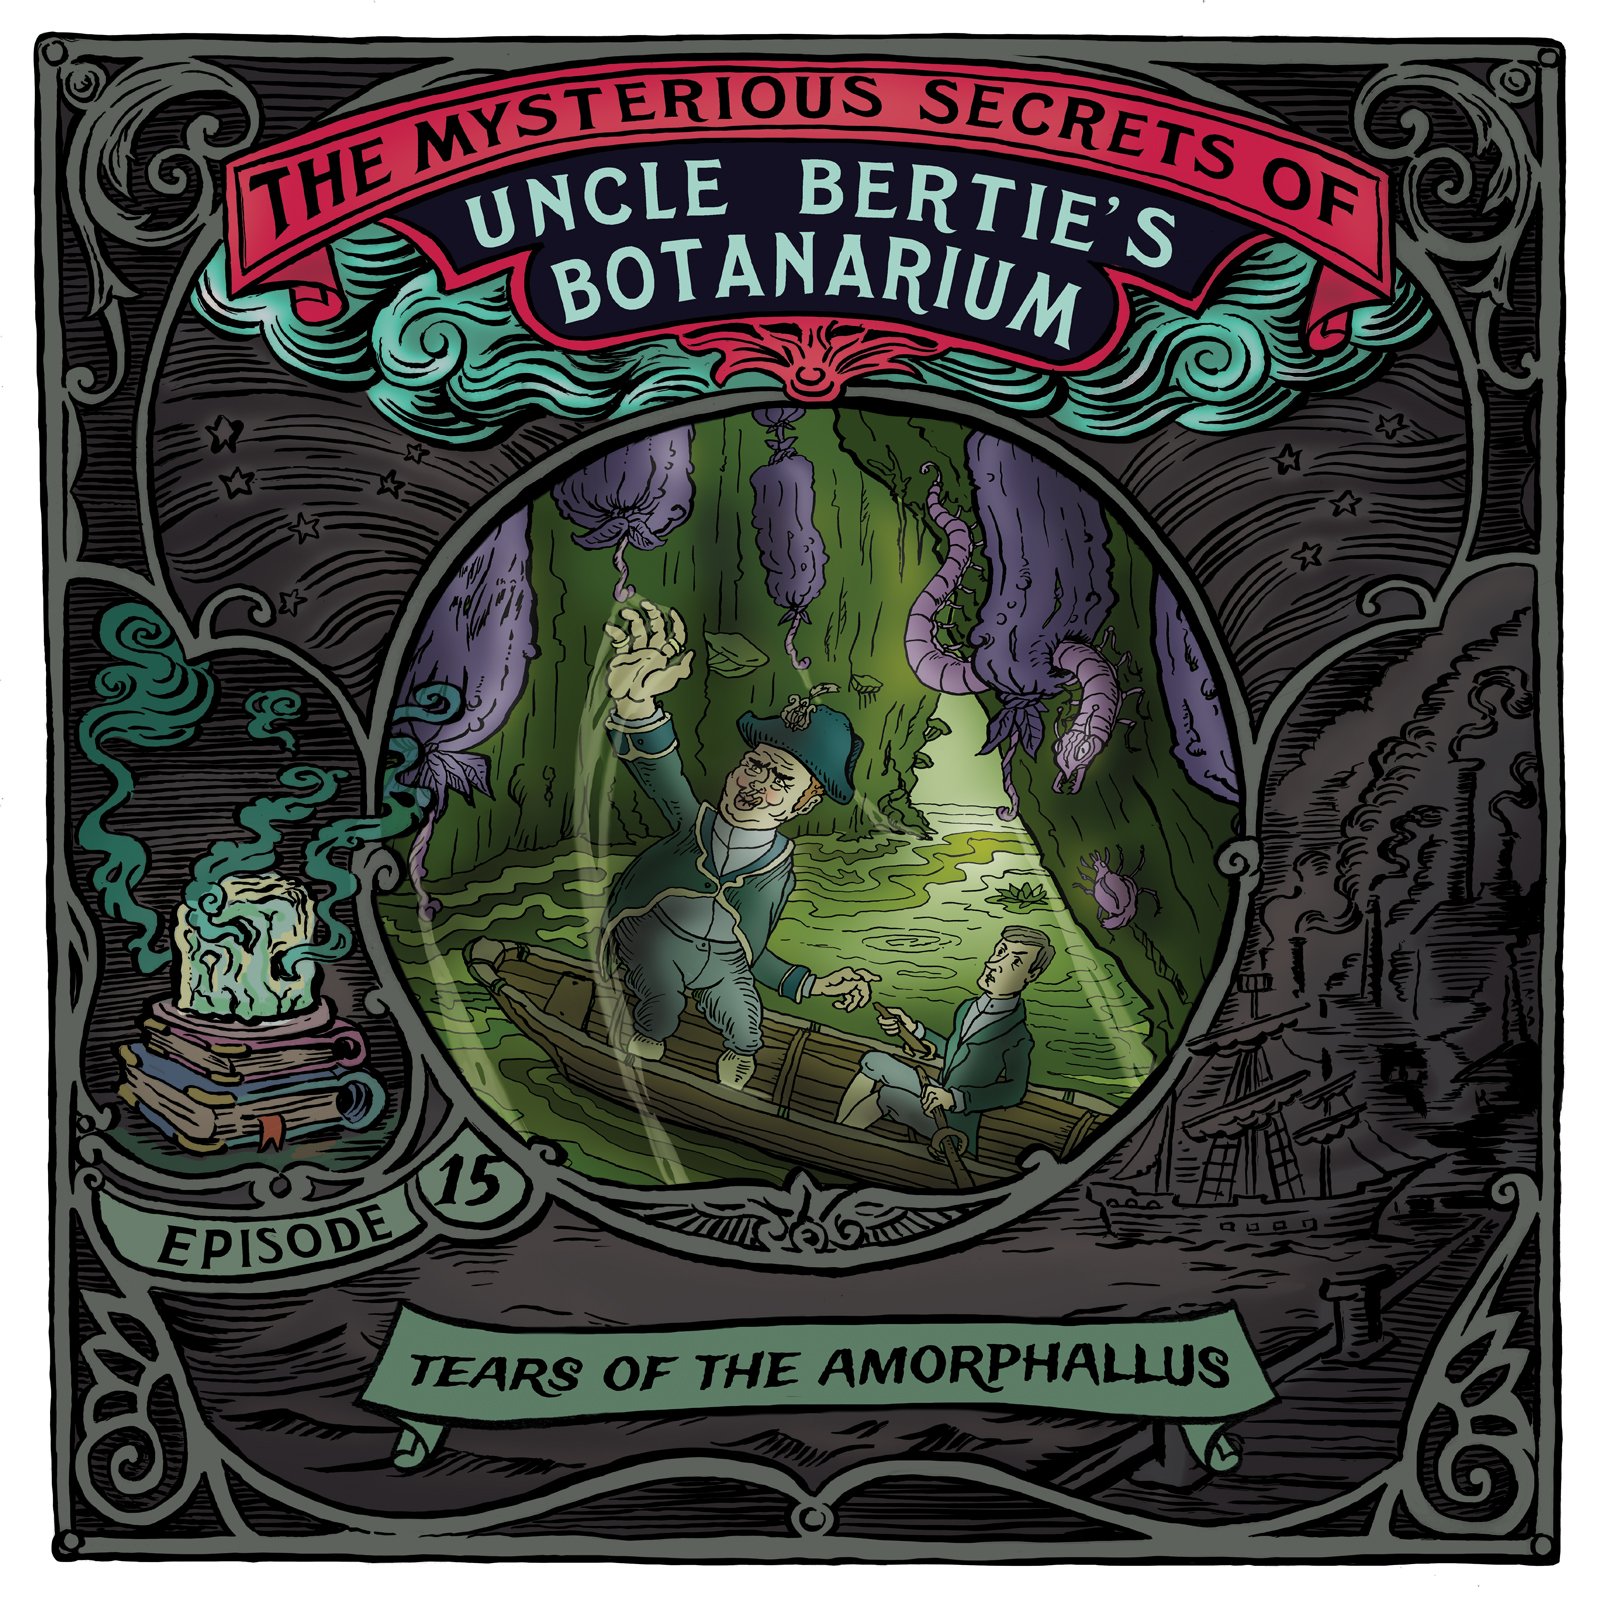 The Mysterious Secrets of Uncle Bertie's Botanarium - Page 2 C4tyoCyWEAEN-mG.jpg:large